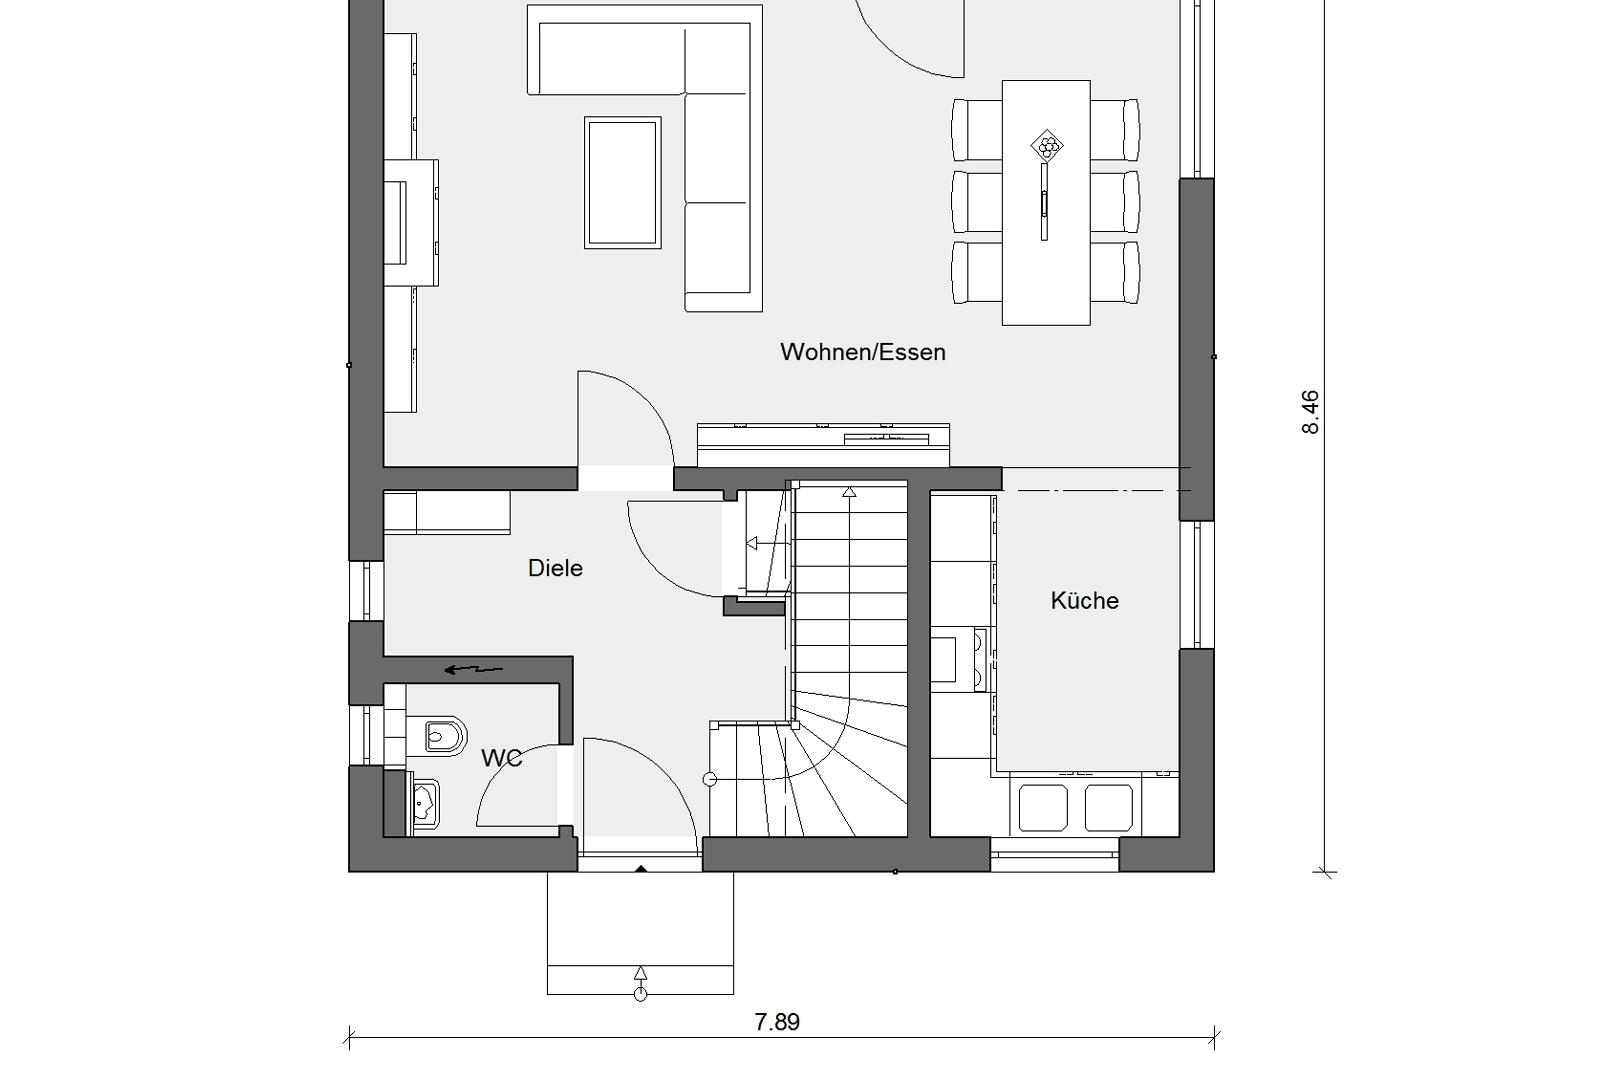 Ground floor floor plan E 20-108.4 The classic city villa